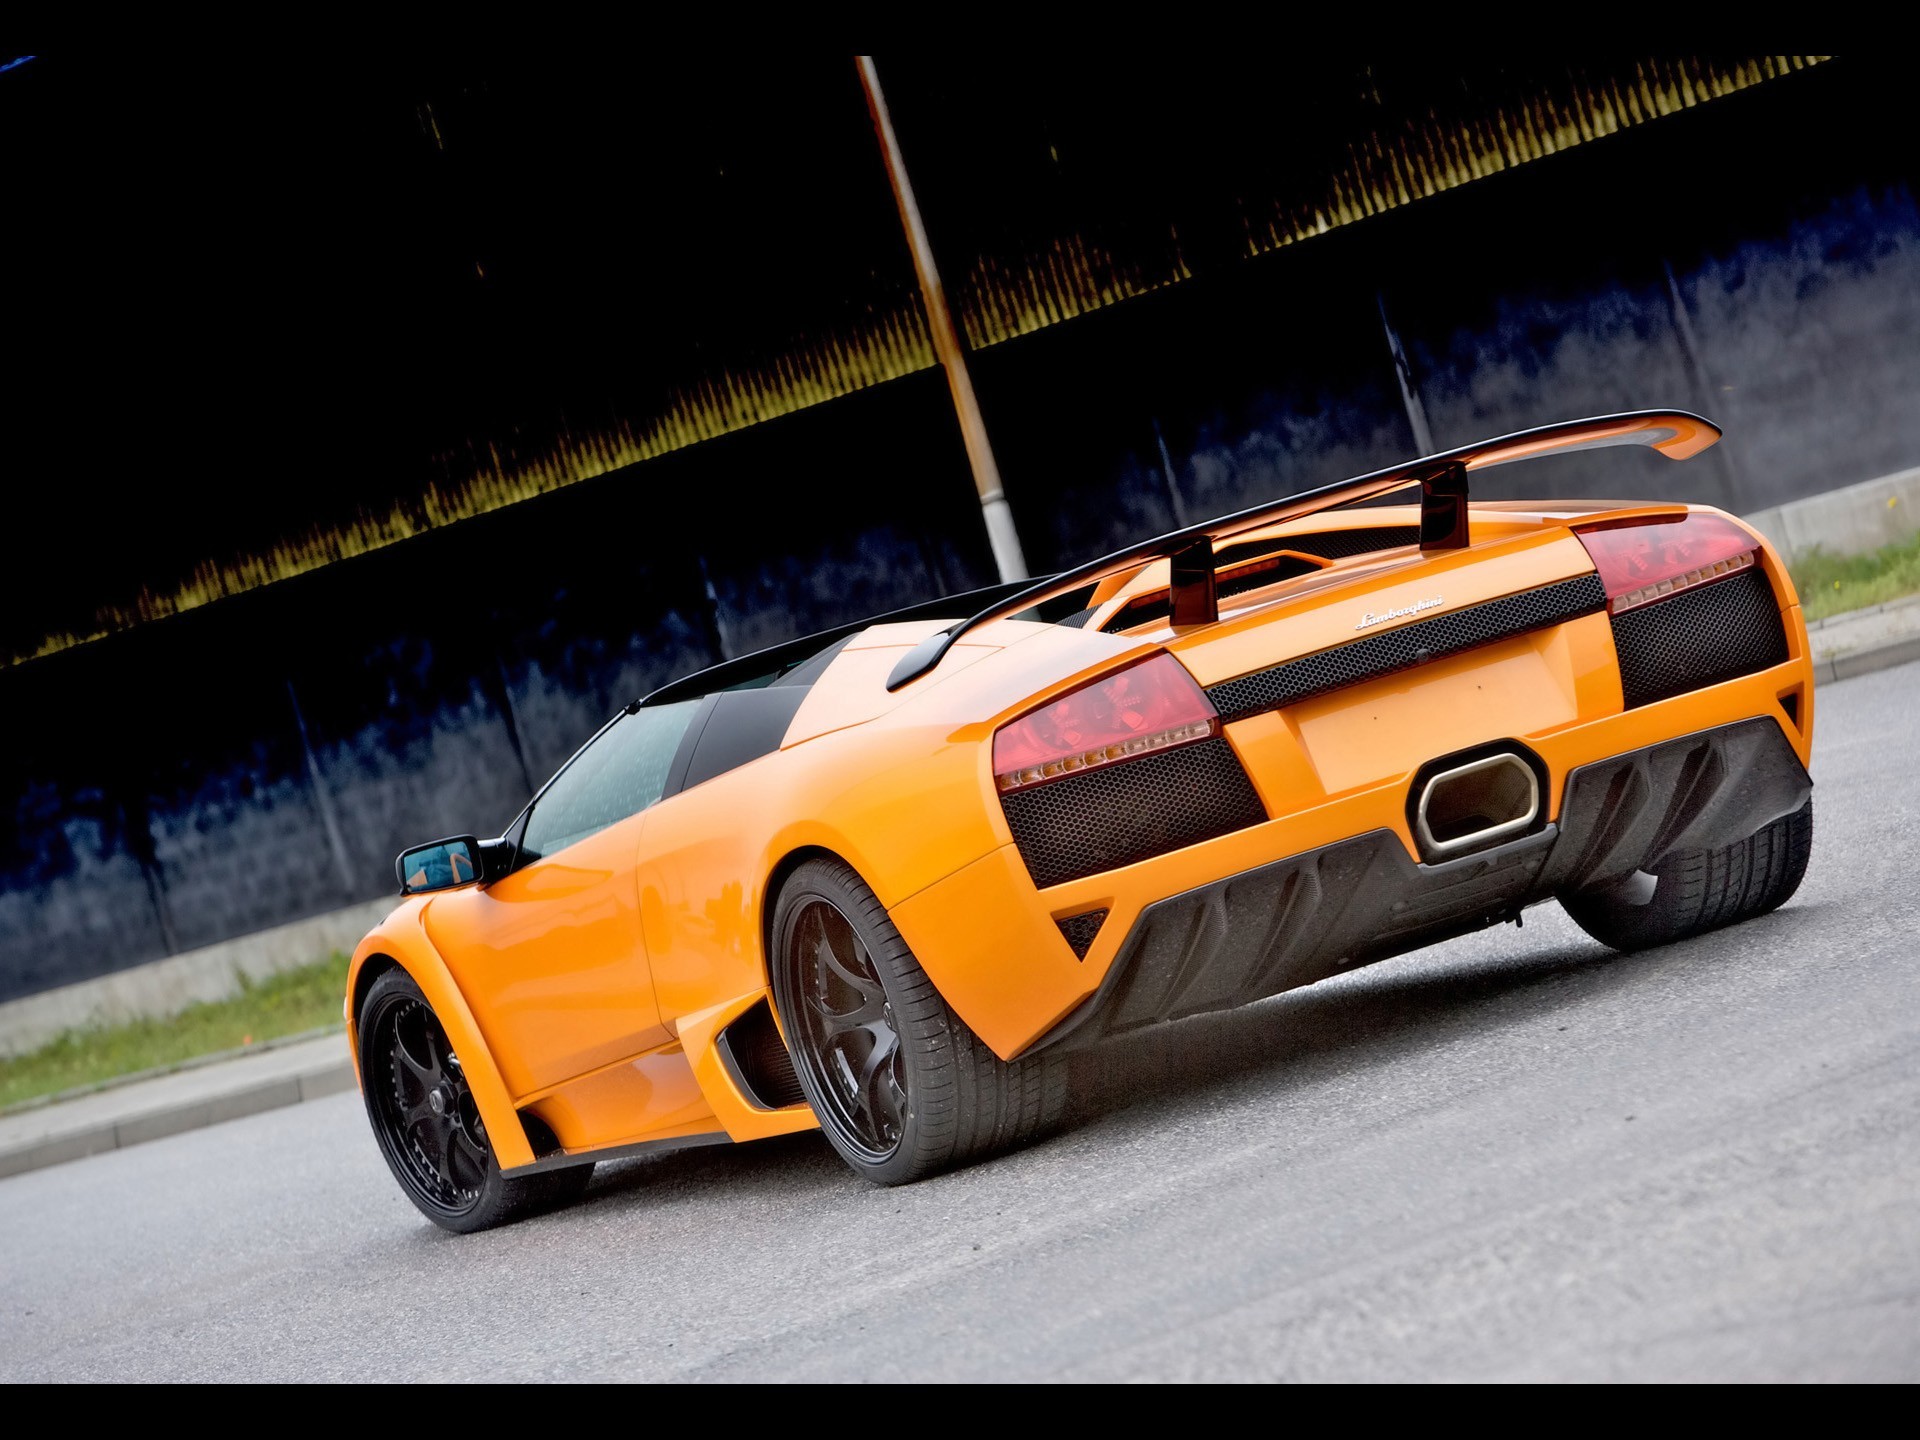  Wallpapers Desktop on Car Hd Wallpaper Color Palette Tags Cars Backview Vehicles Lamborghini